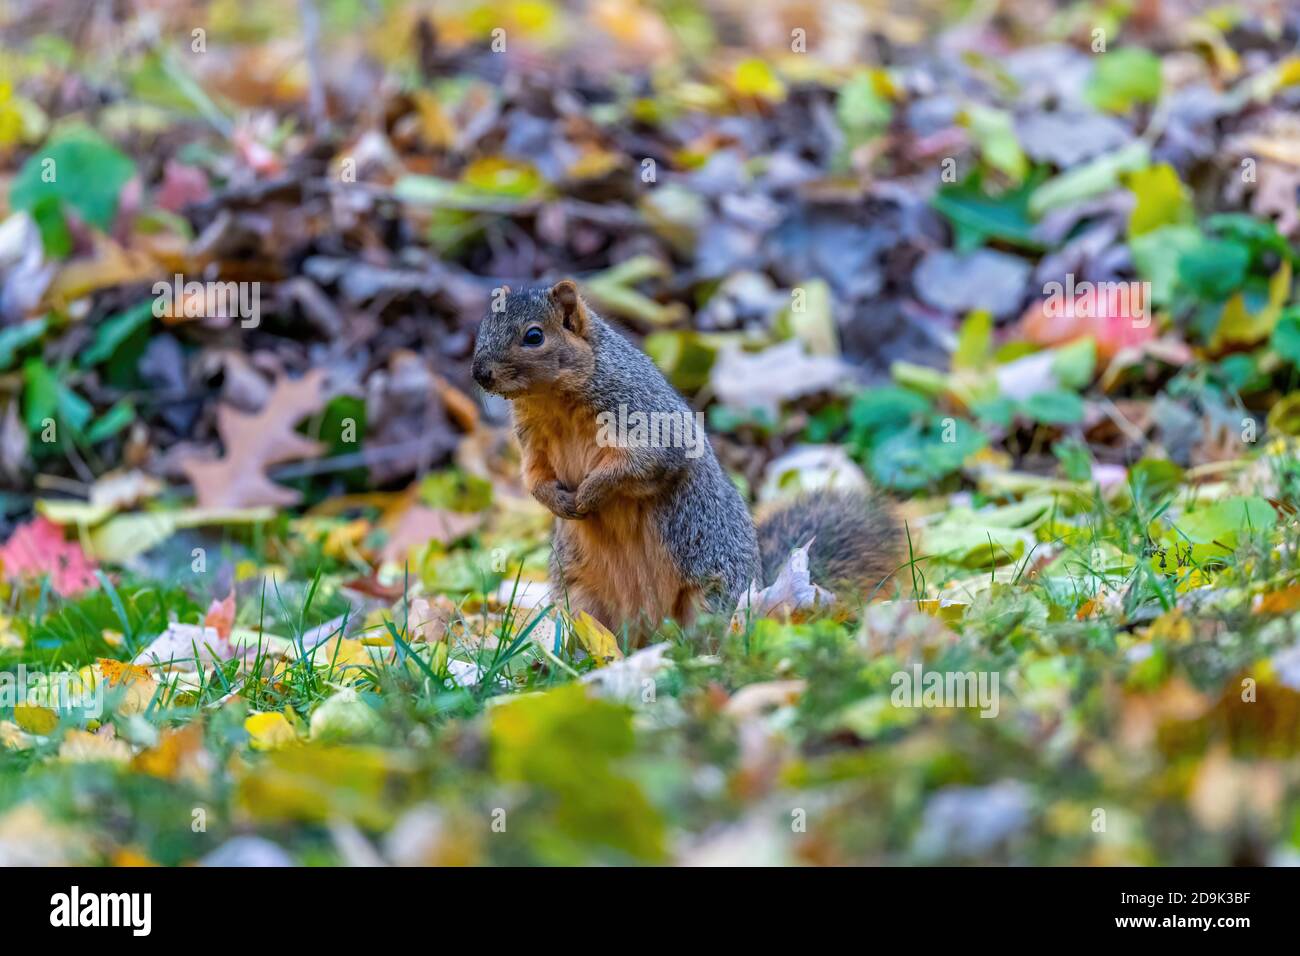 A Fox Squirrel(Sciurus niger) standing on it's rear legs amid fallen leaves in Autumn. Stock Photo